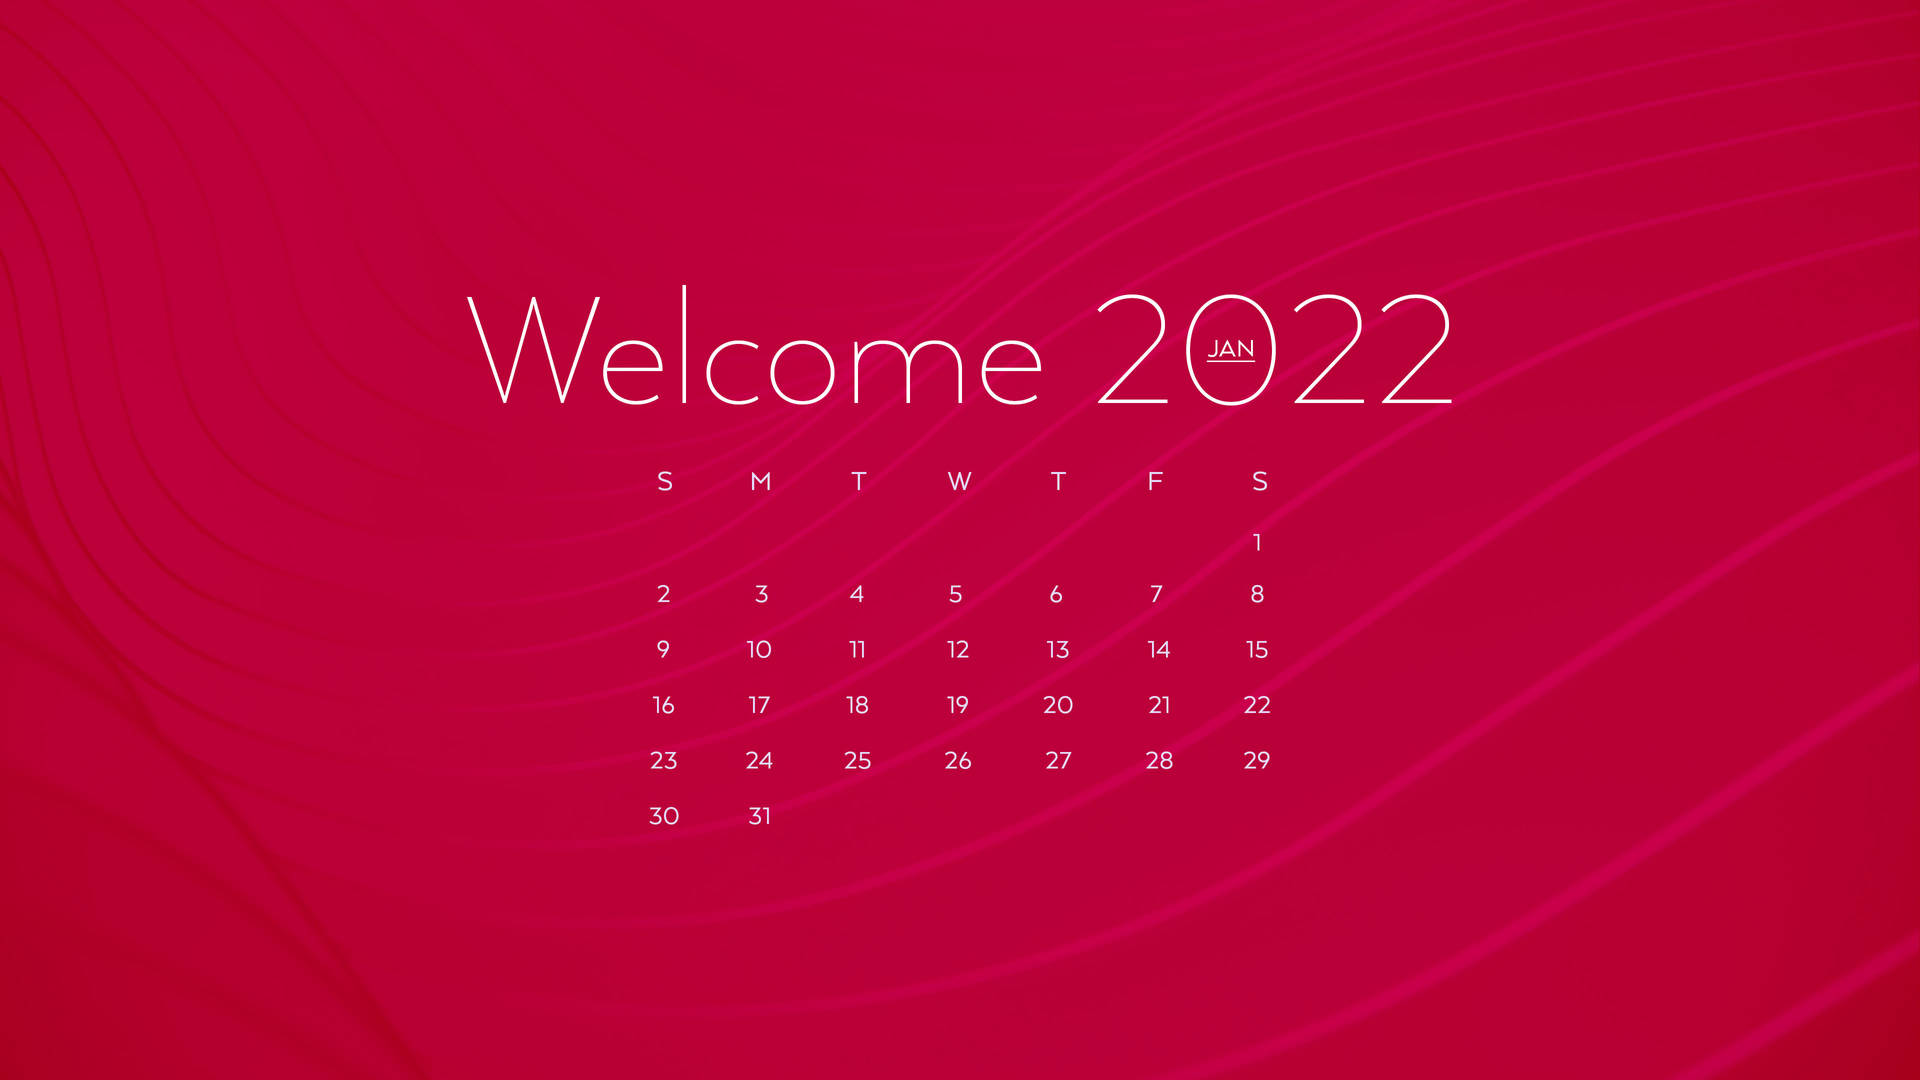 Welcome January 2022 Red Calendar Wallpaper